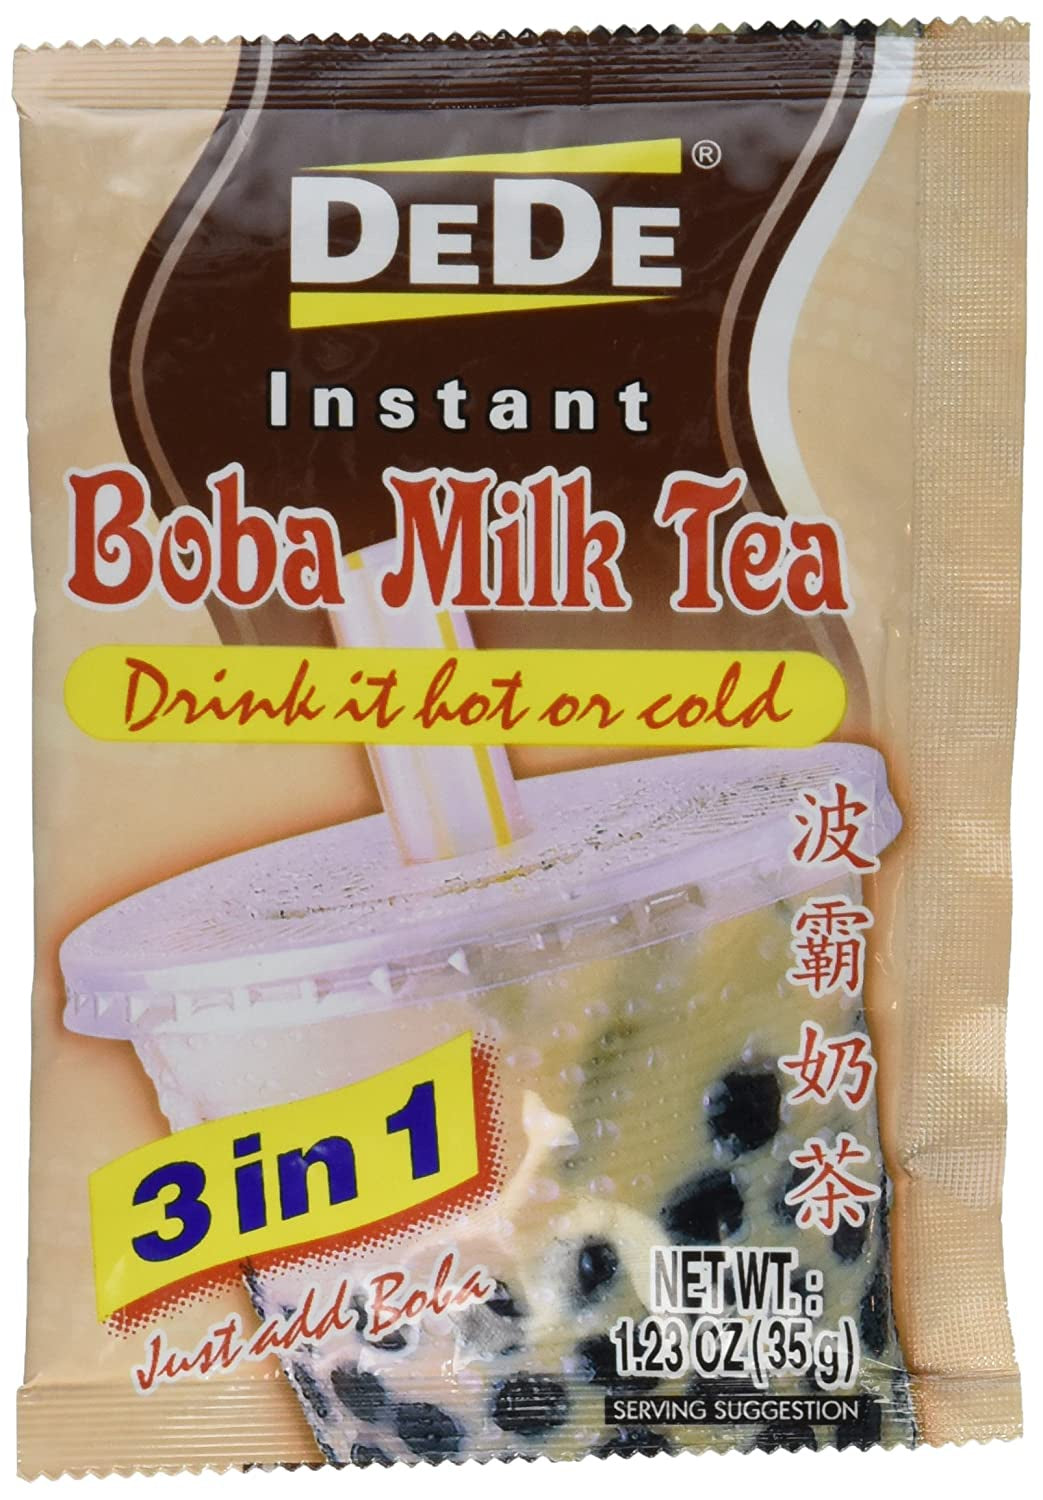 De de - Instant Boba Milk Tea 3 in 1 - ชานมไข่มุกกึ่งสำเร็จรูป